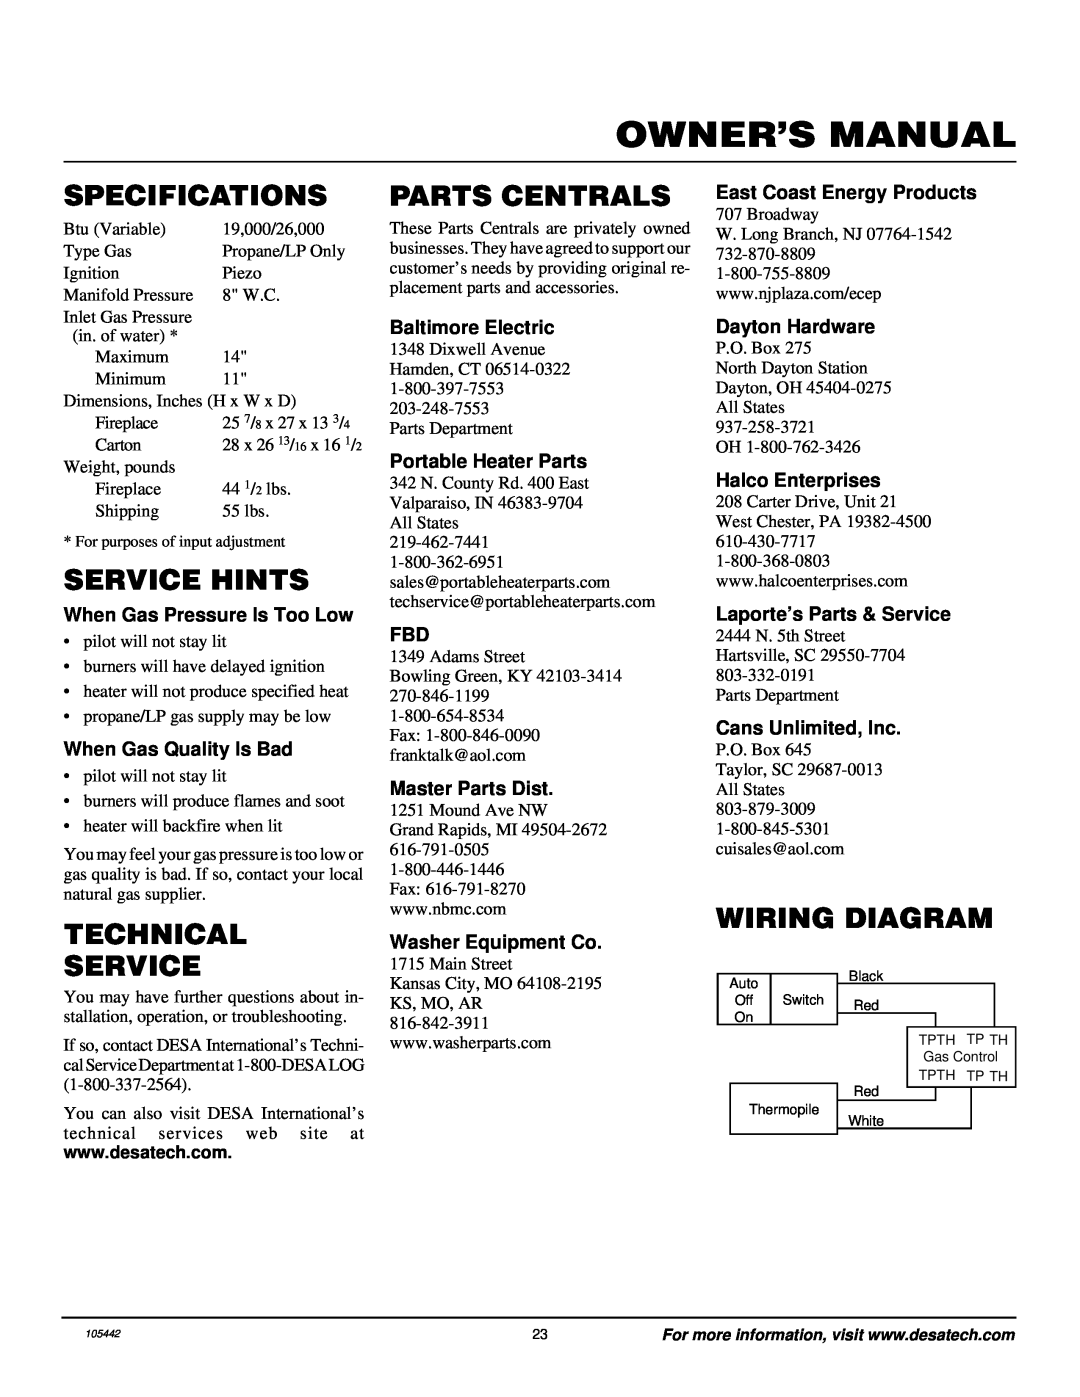 Desa CF26PR installation manual Specifications, Service Hints, Technical Service, Parts Centrals, Wiring Diagram 